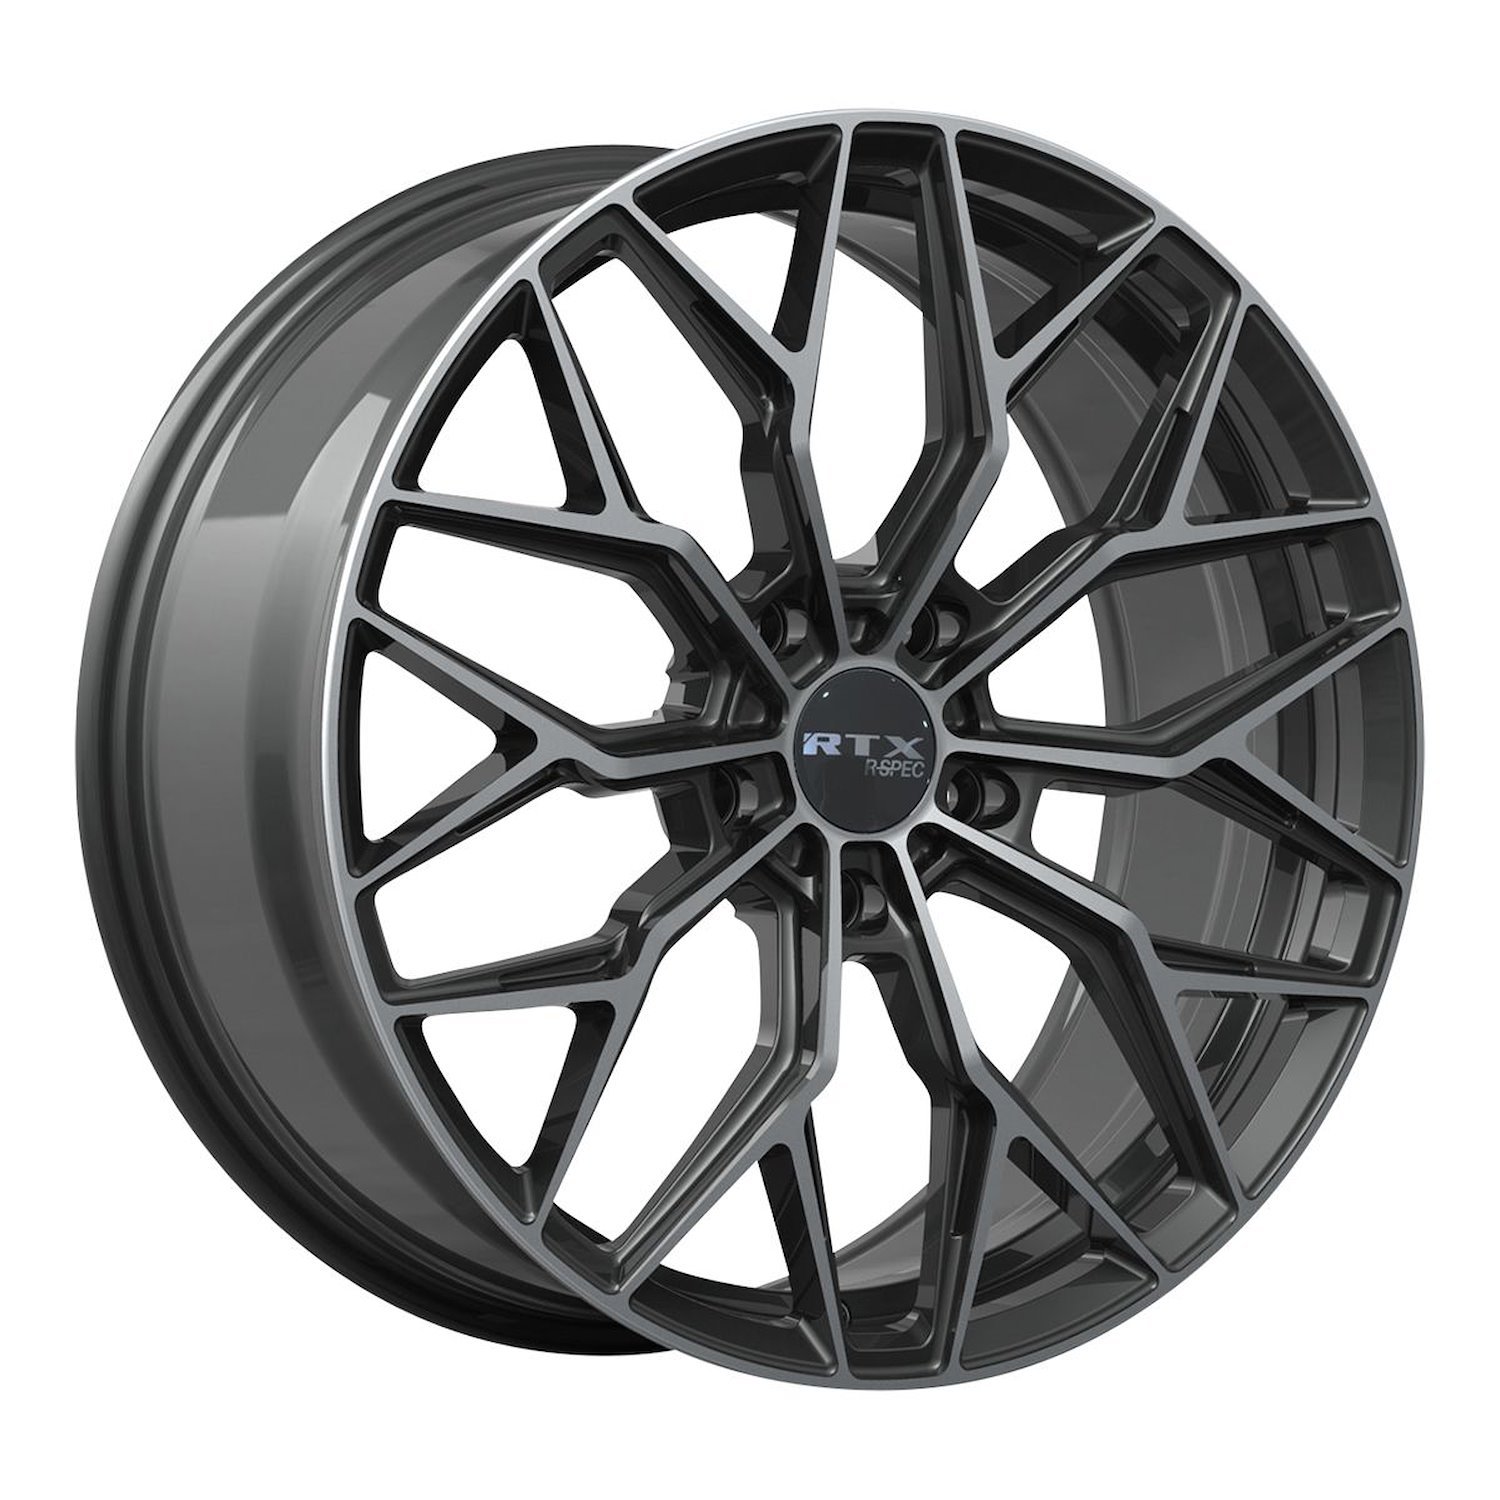 083154 R-Spec Series RS02 Wheel [Size: 18" x 8"] Gloss Black Machined Finish